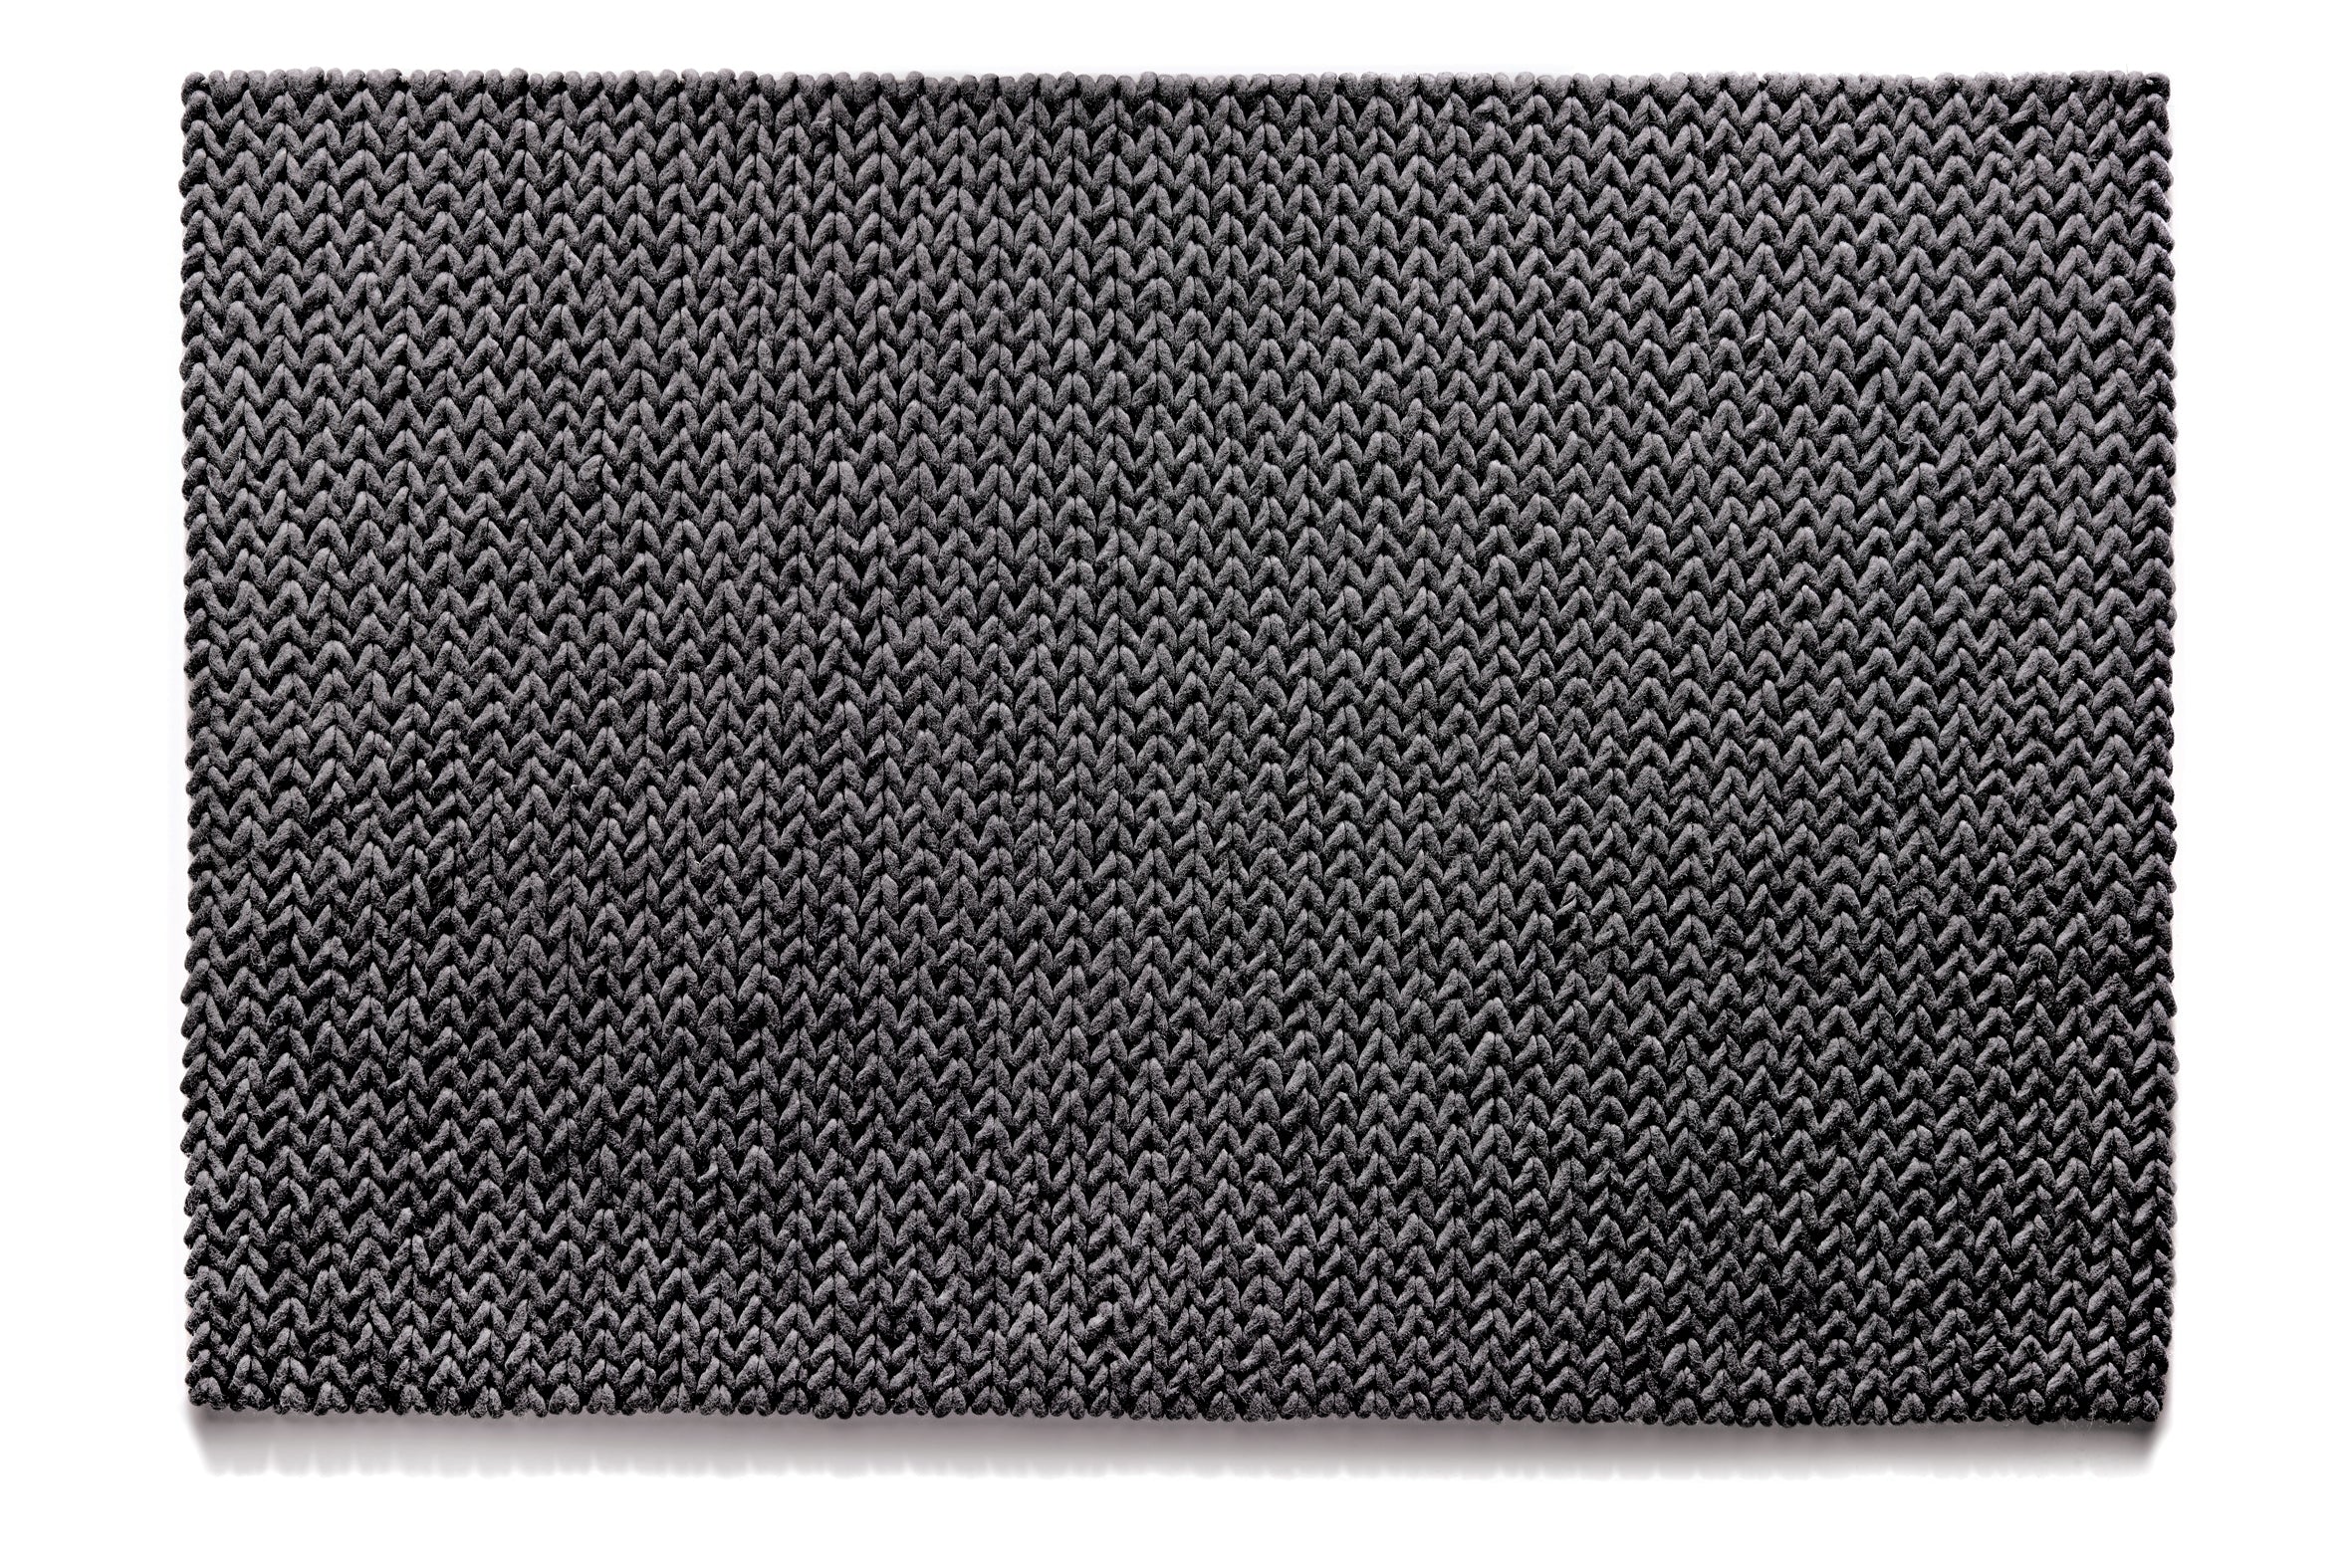 Modern cable rug in dark grey